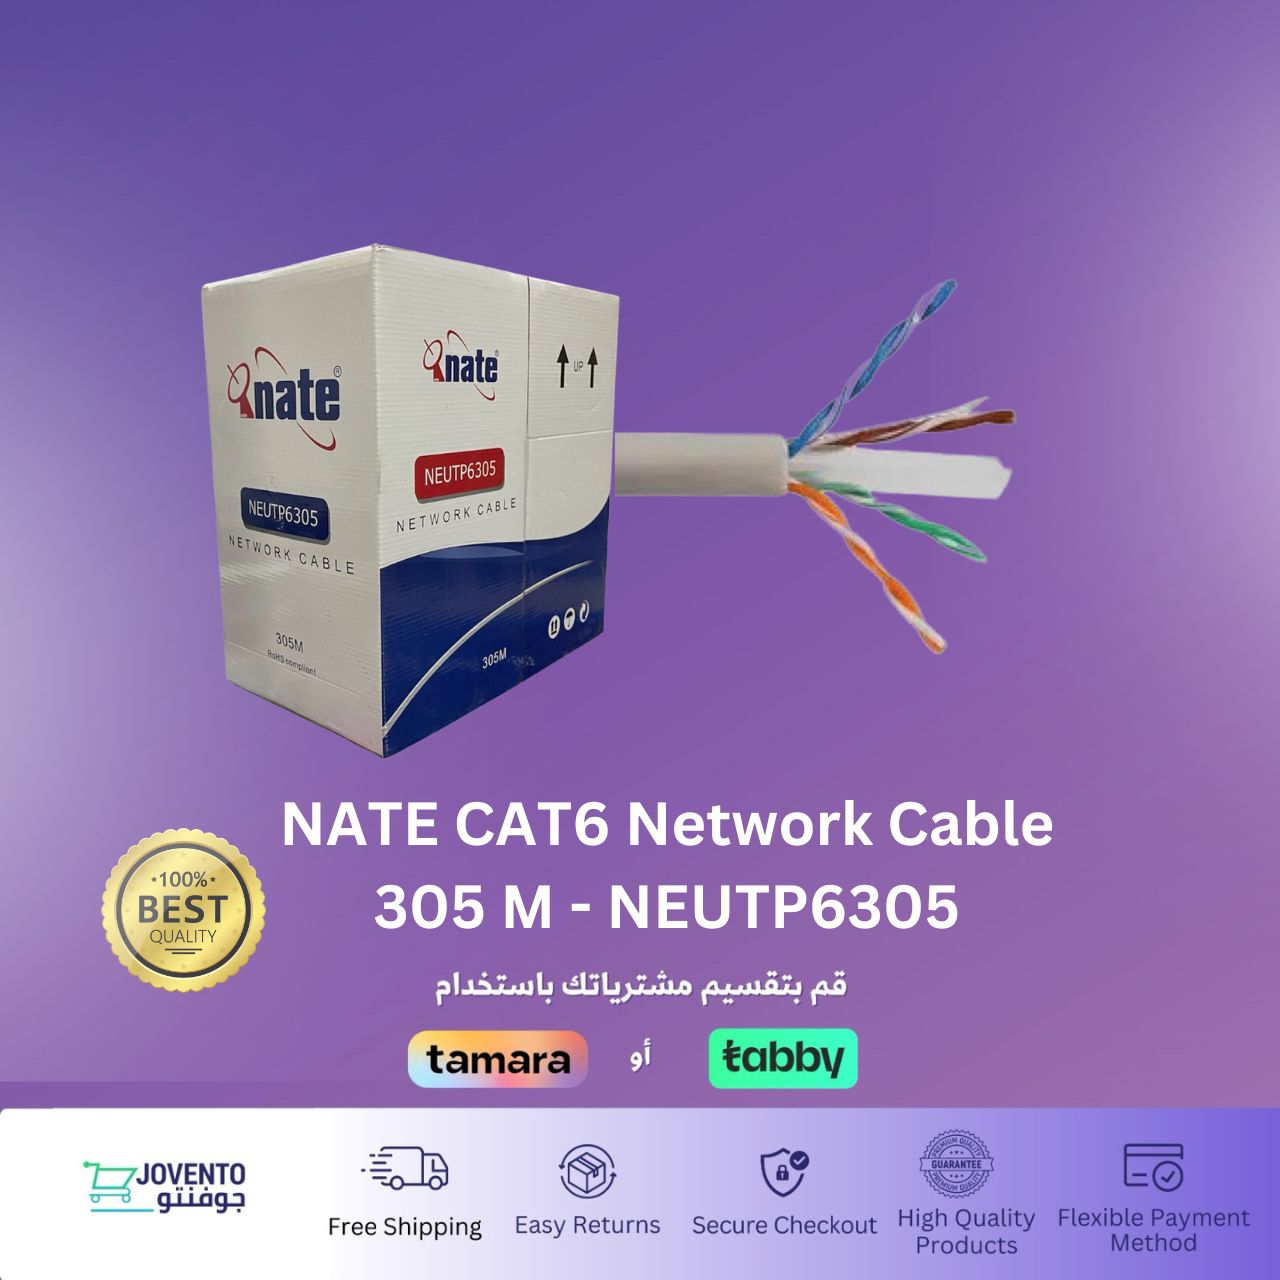 NATE CAT6 Network Cable 305 M - NEUTP6305